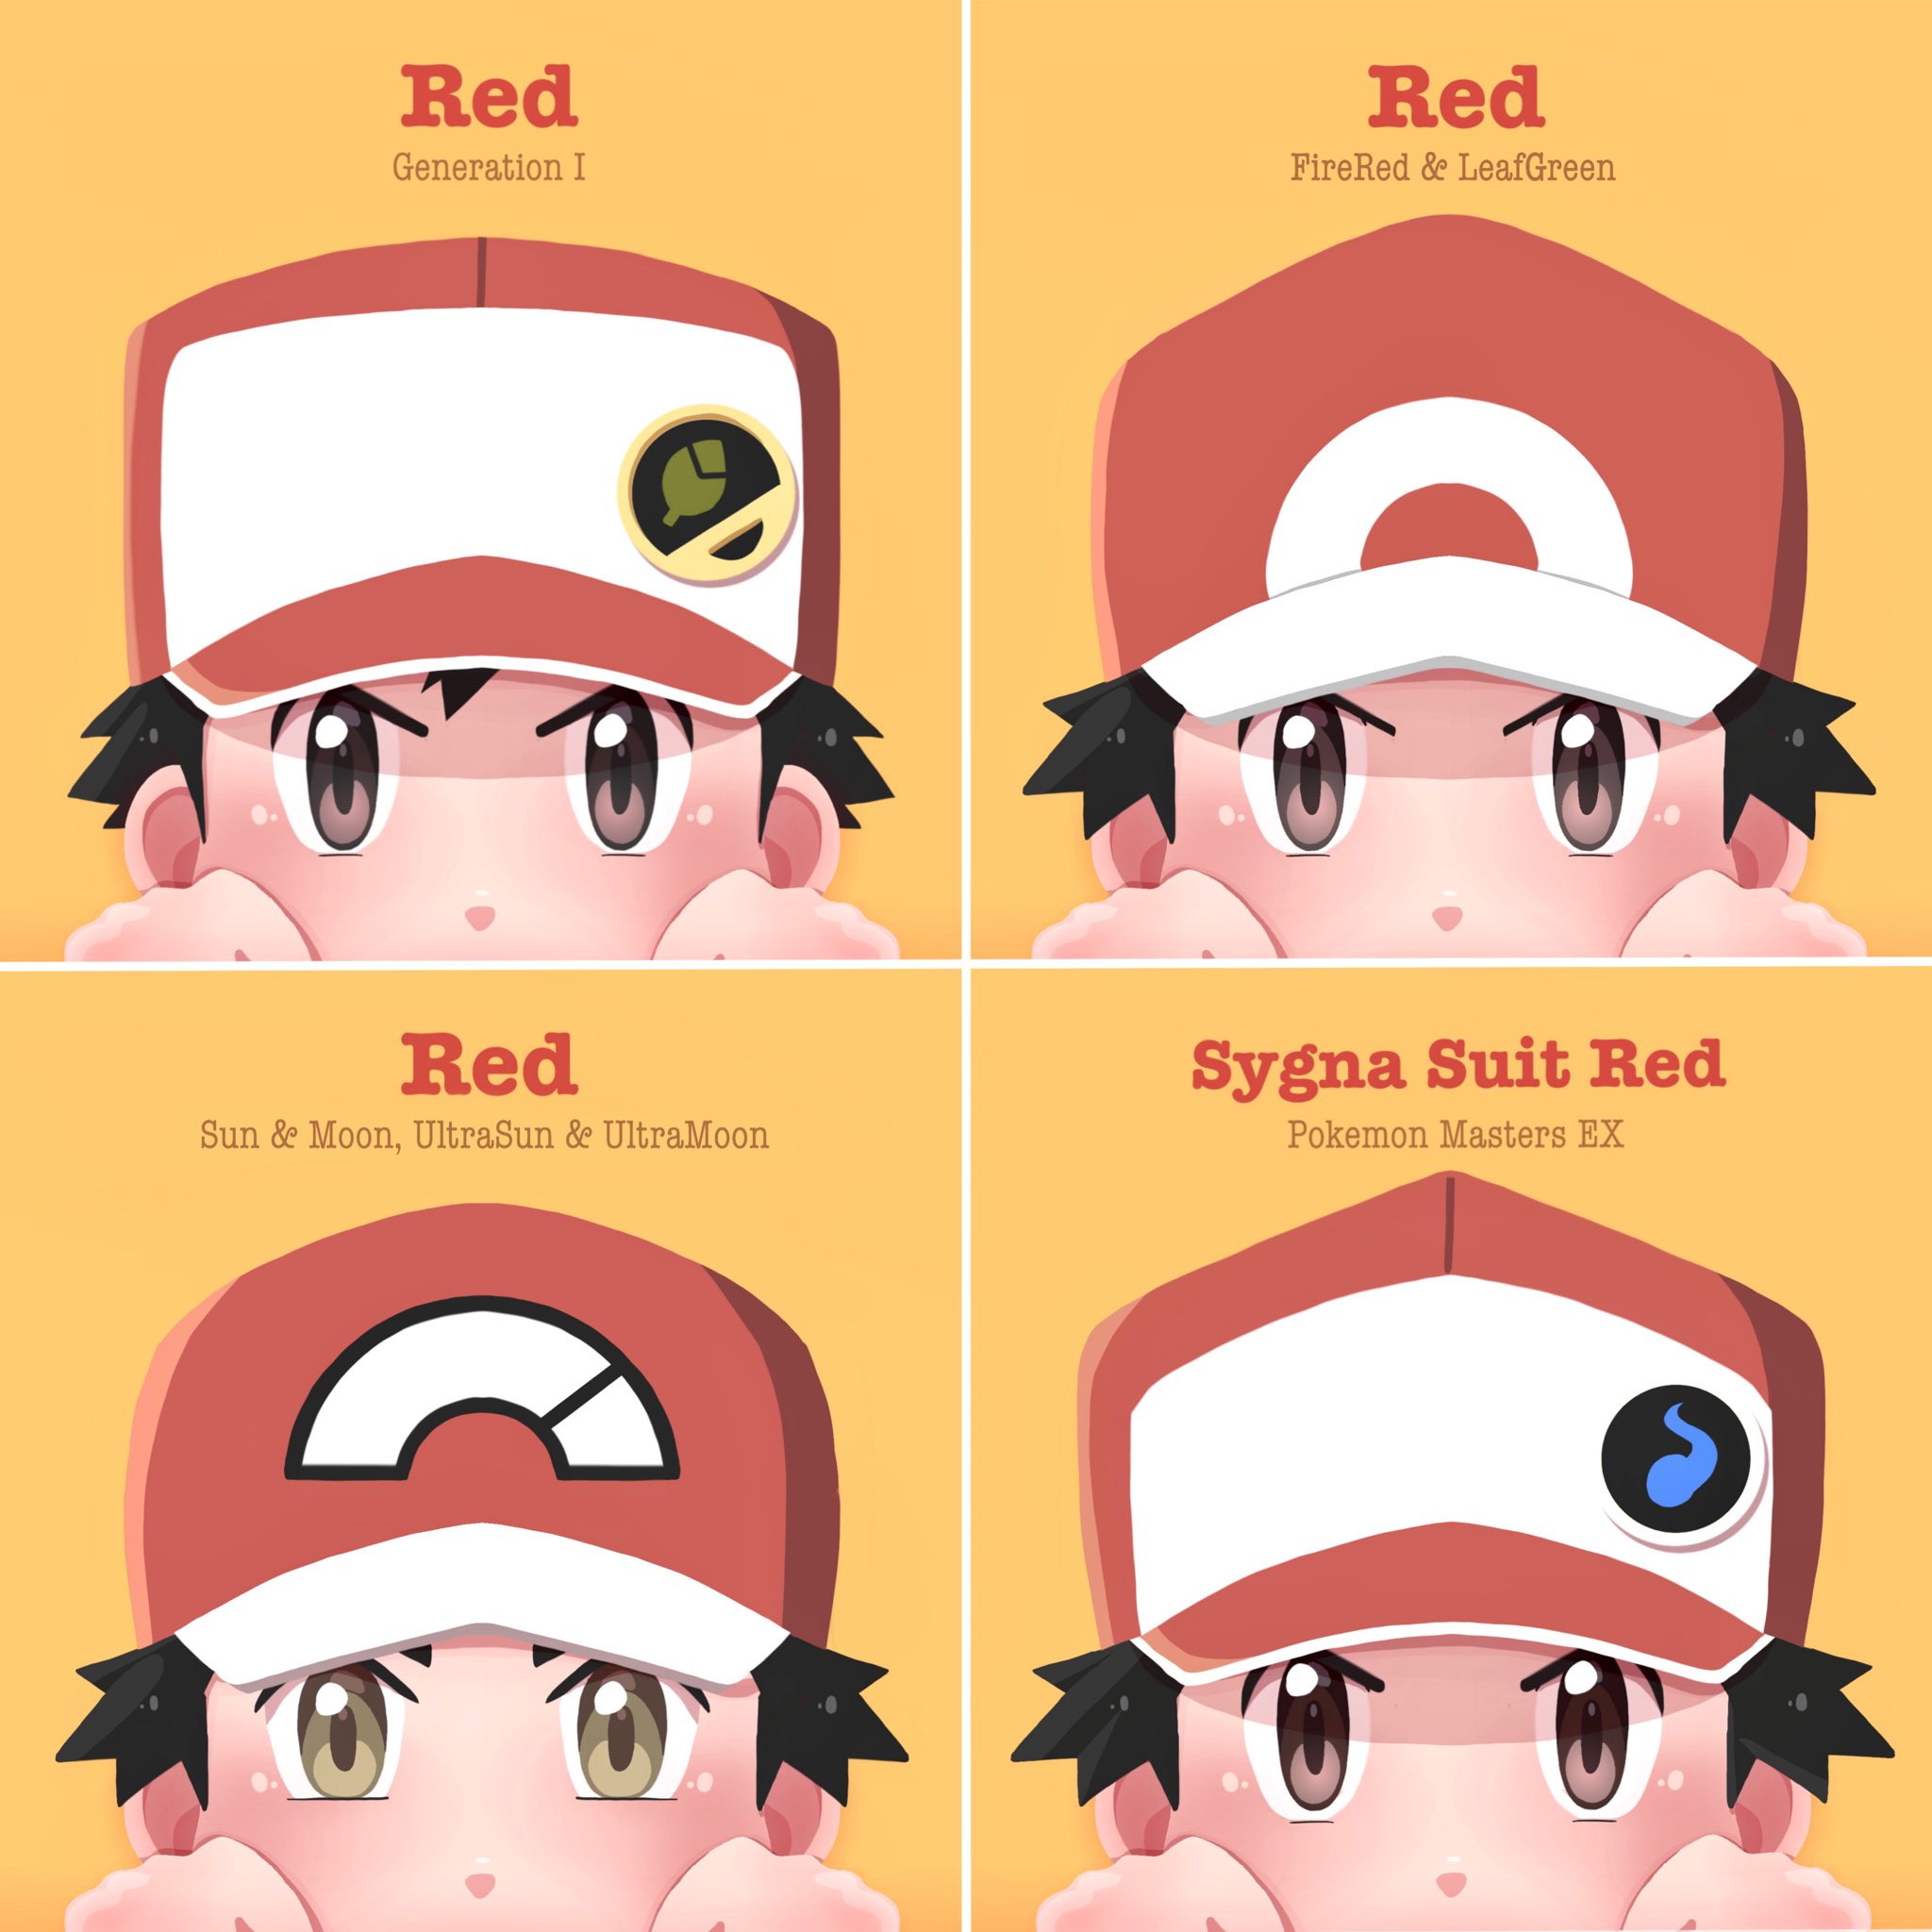 Refrone on X: I think I'm gonna make icons for other characters too #レッド  #ポケットモンスター #ポケモン #pokemon #pokemonred #redpokemon #pokemonfanart   / X